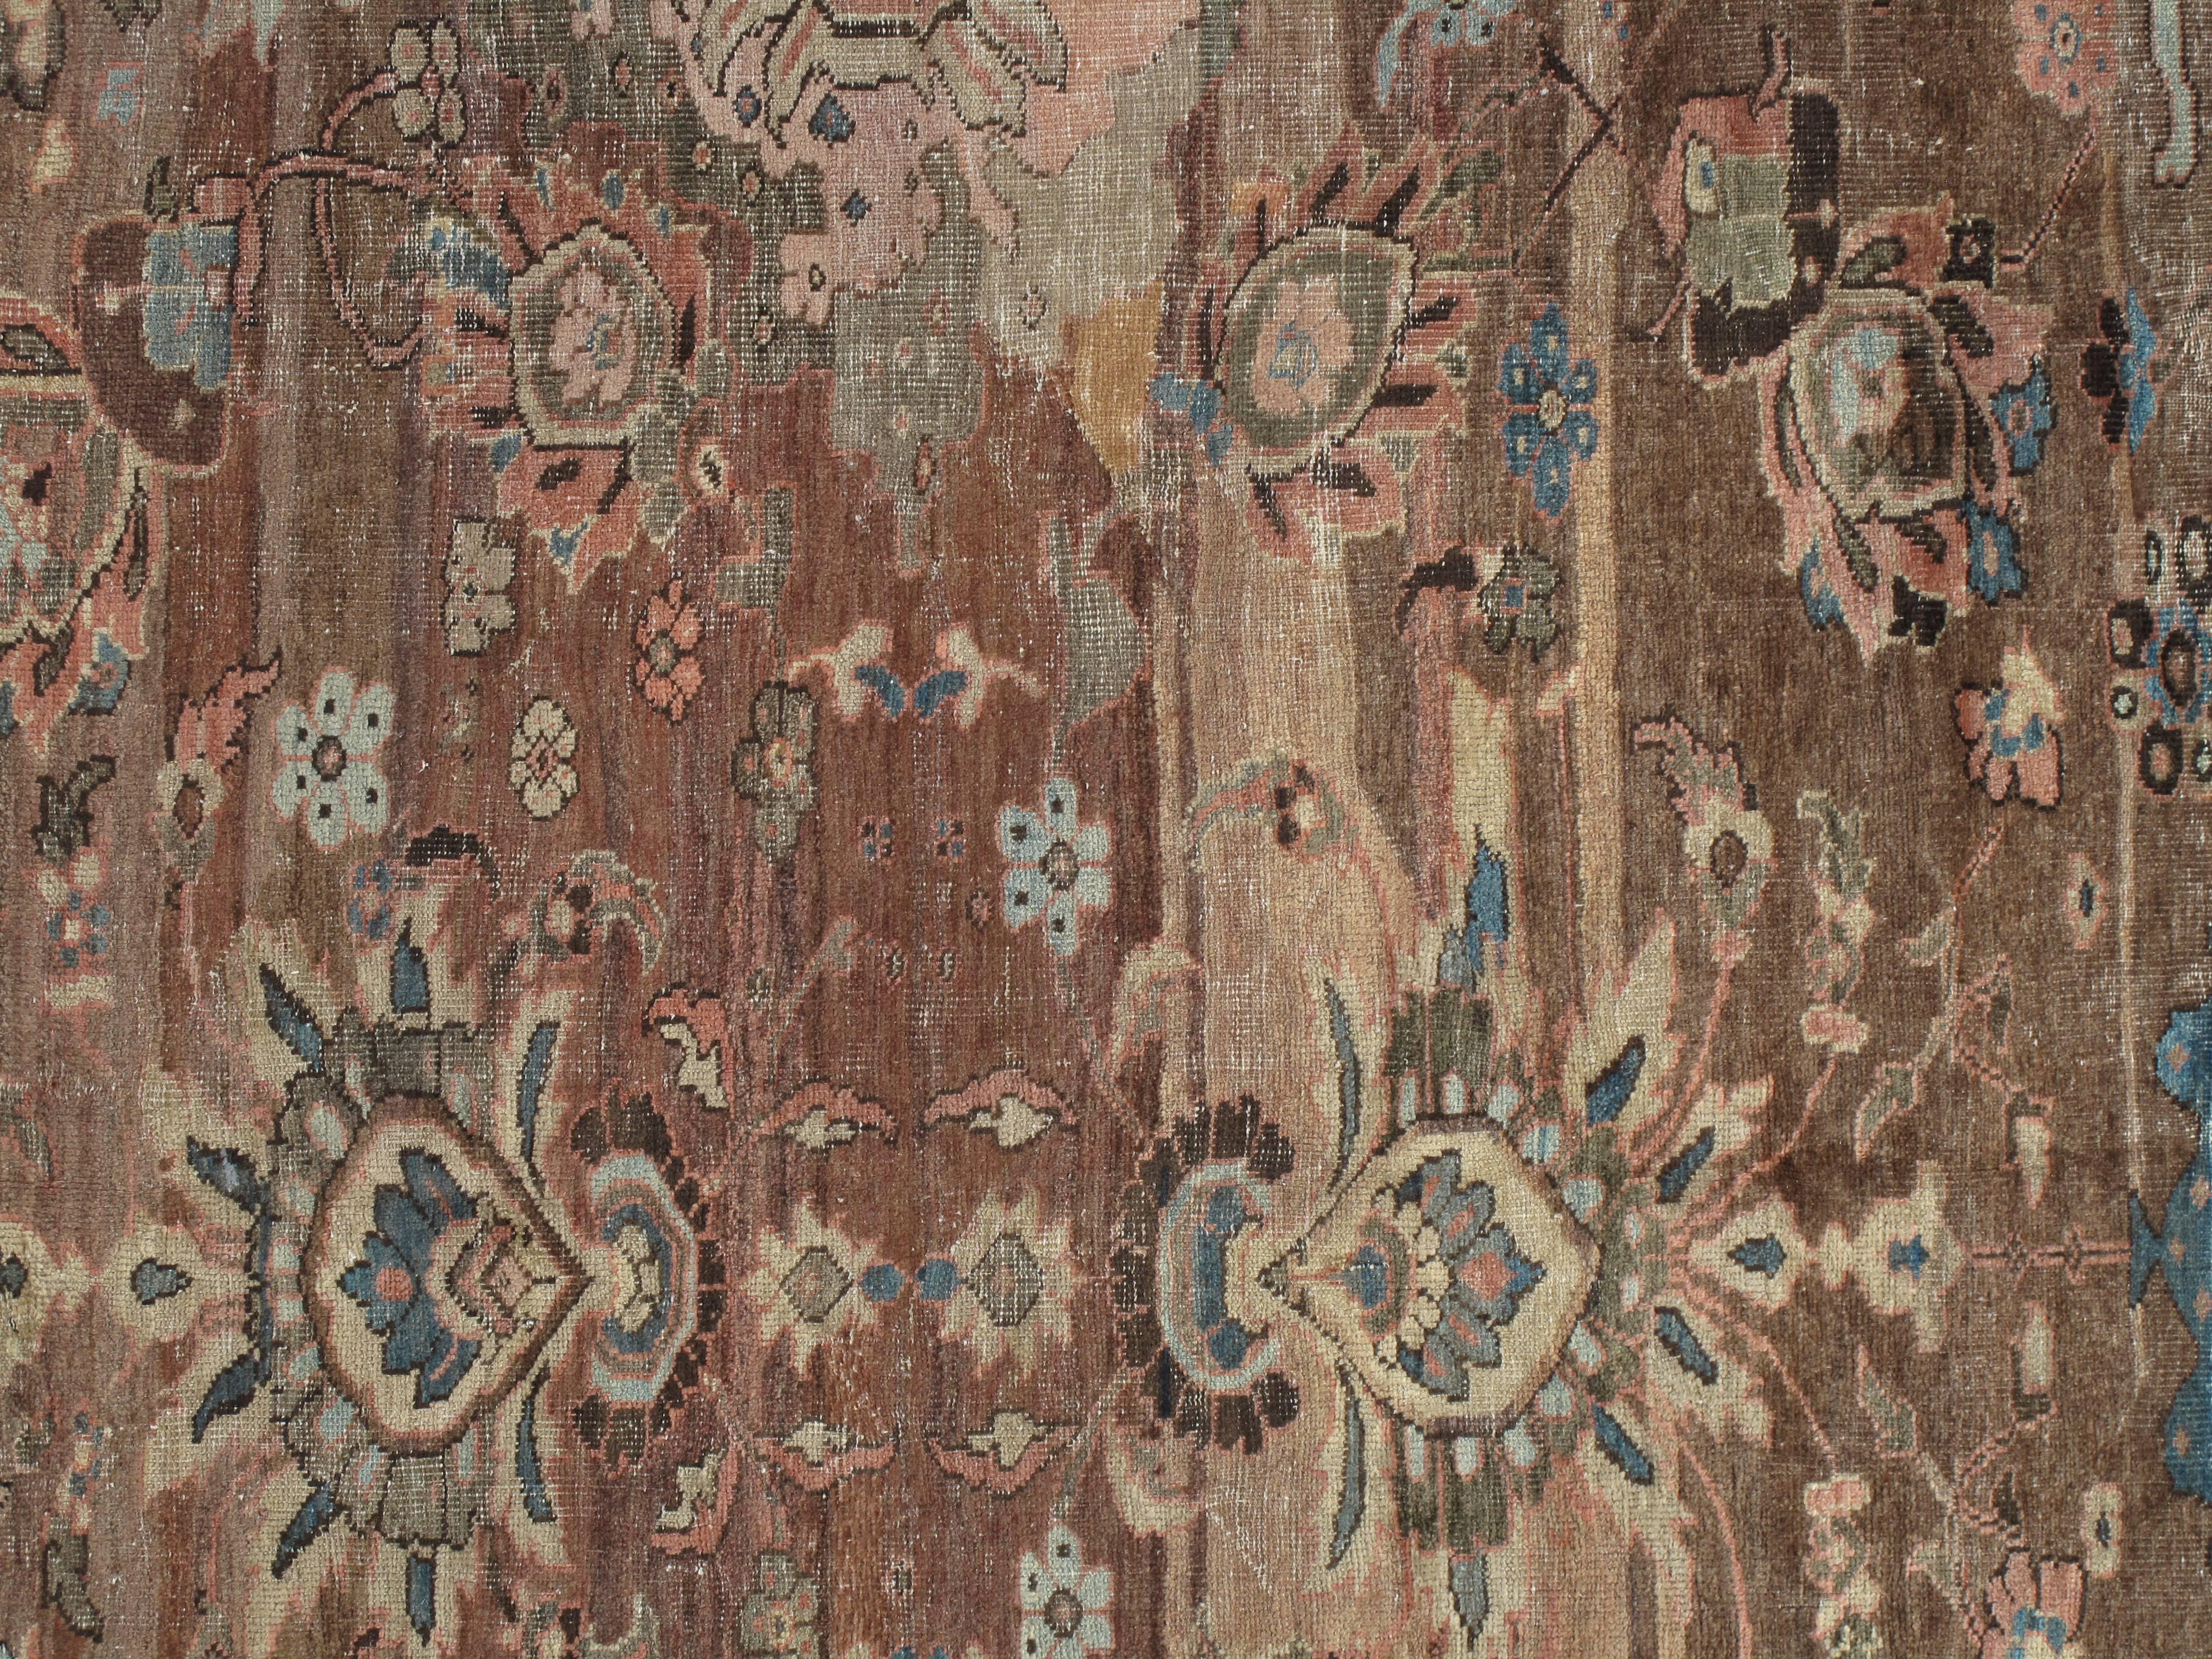 Wool Antique Persian Sultanabad Carpet, Handmade Oriental Rug, Light Blue, Terracotta